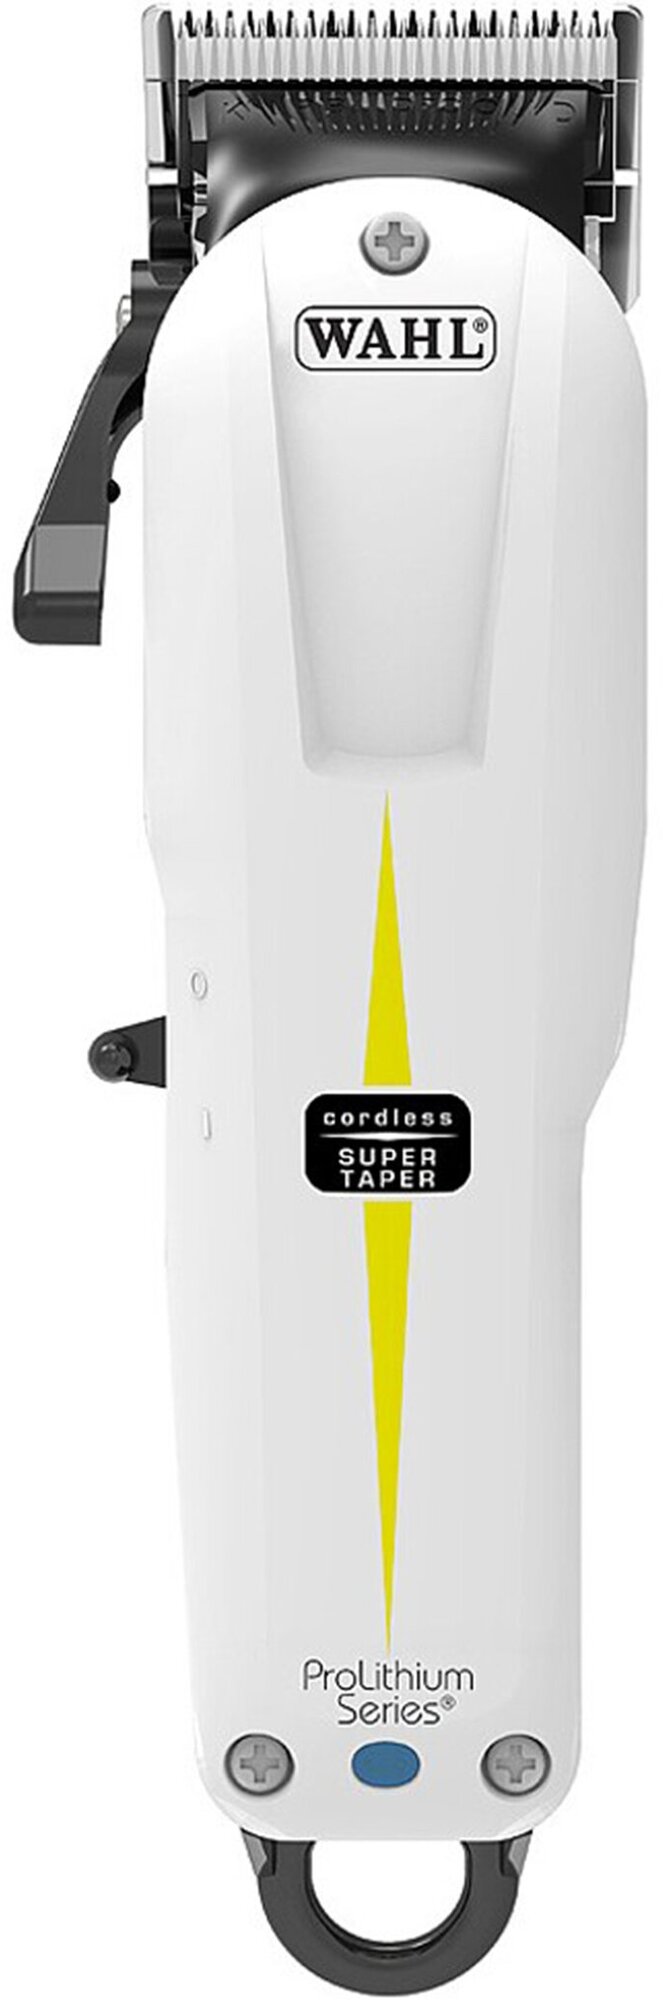 Машинка для стрижки Wahl Super Taper 8591-2316H, белый